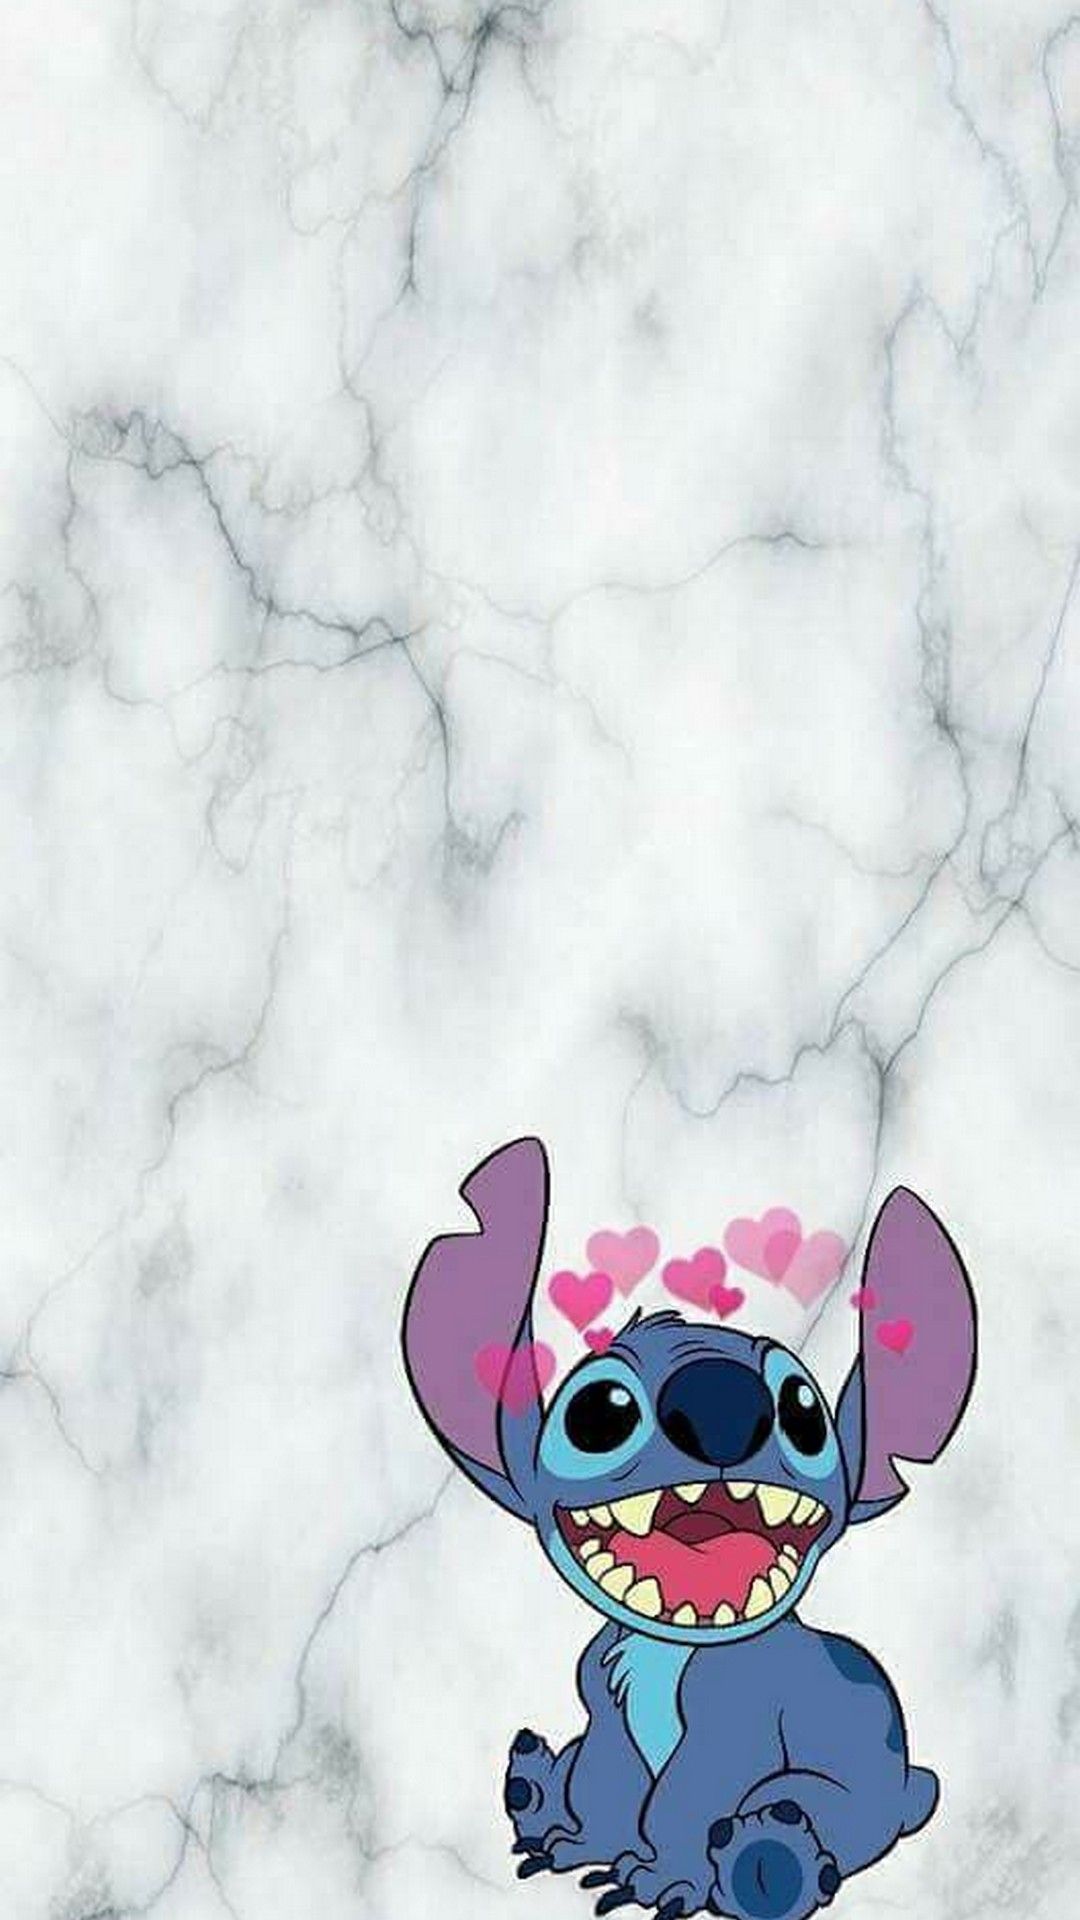 Stitch Wallpaper For Phone. Disney phone wallpaper, Cute disney